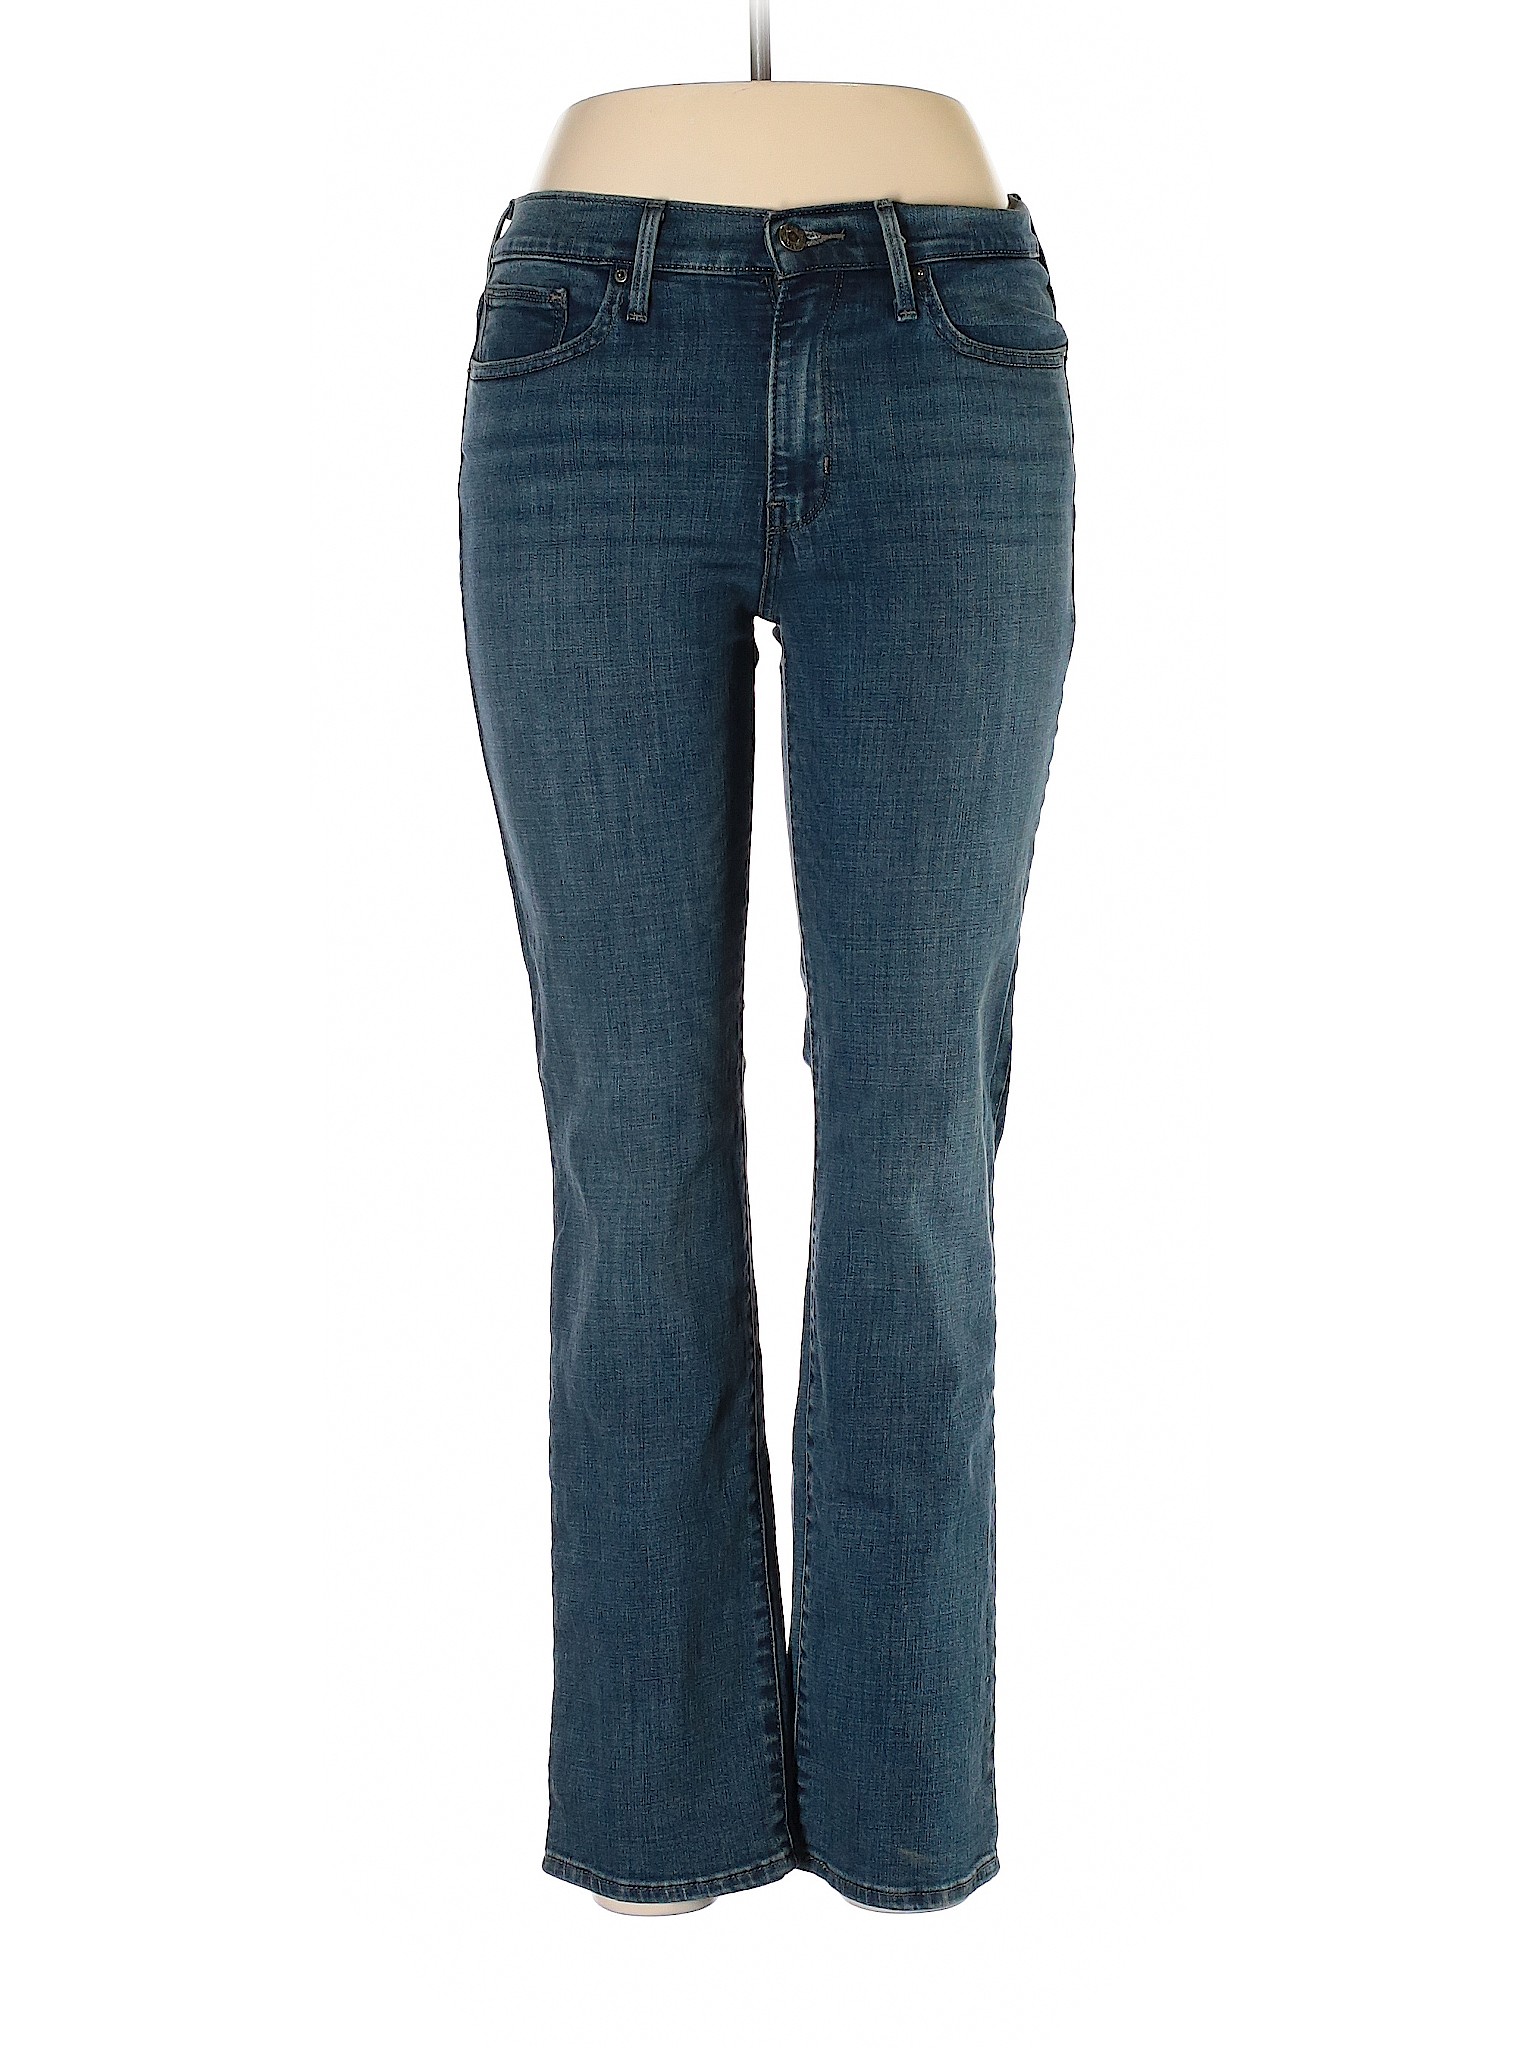 Levi's Blue Jeans 30 Waist - 76% off | thredUP